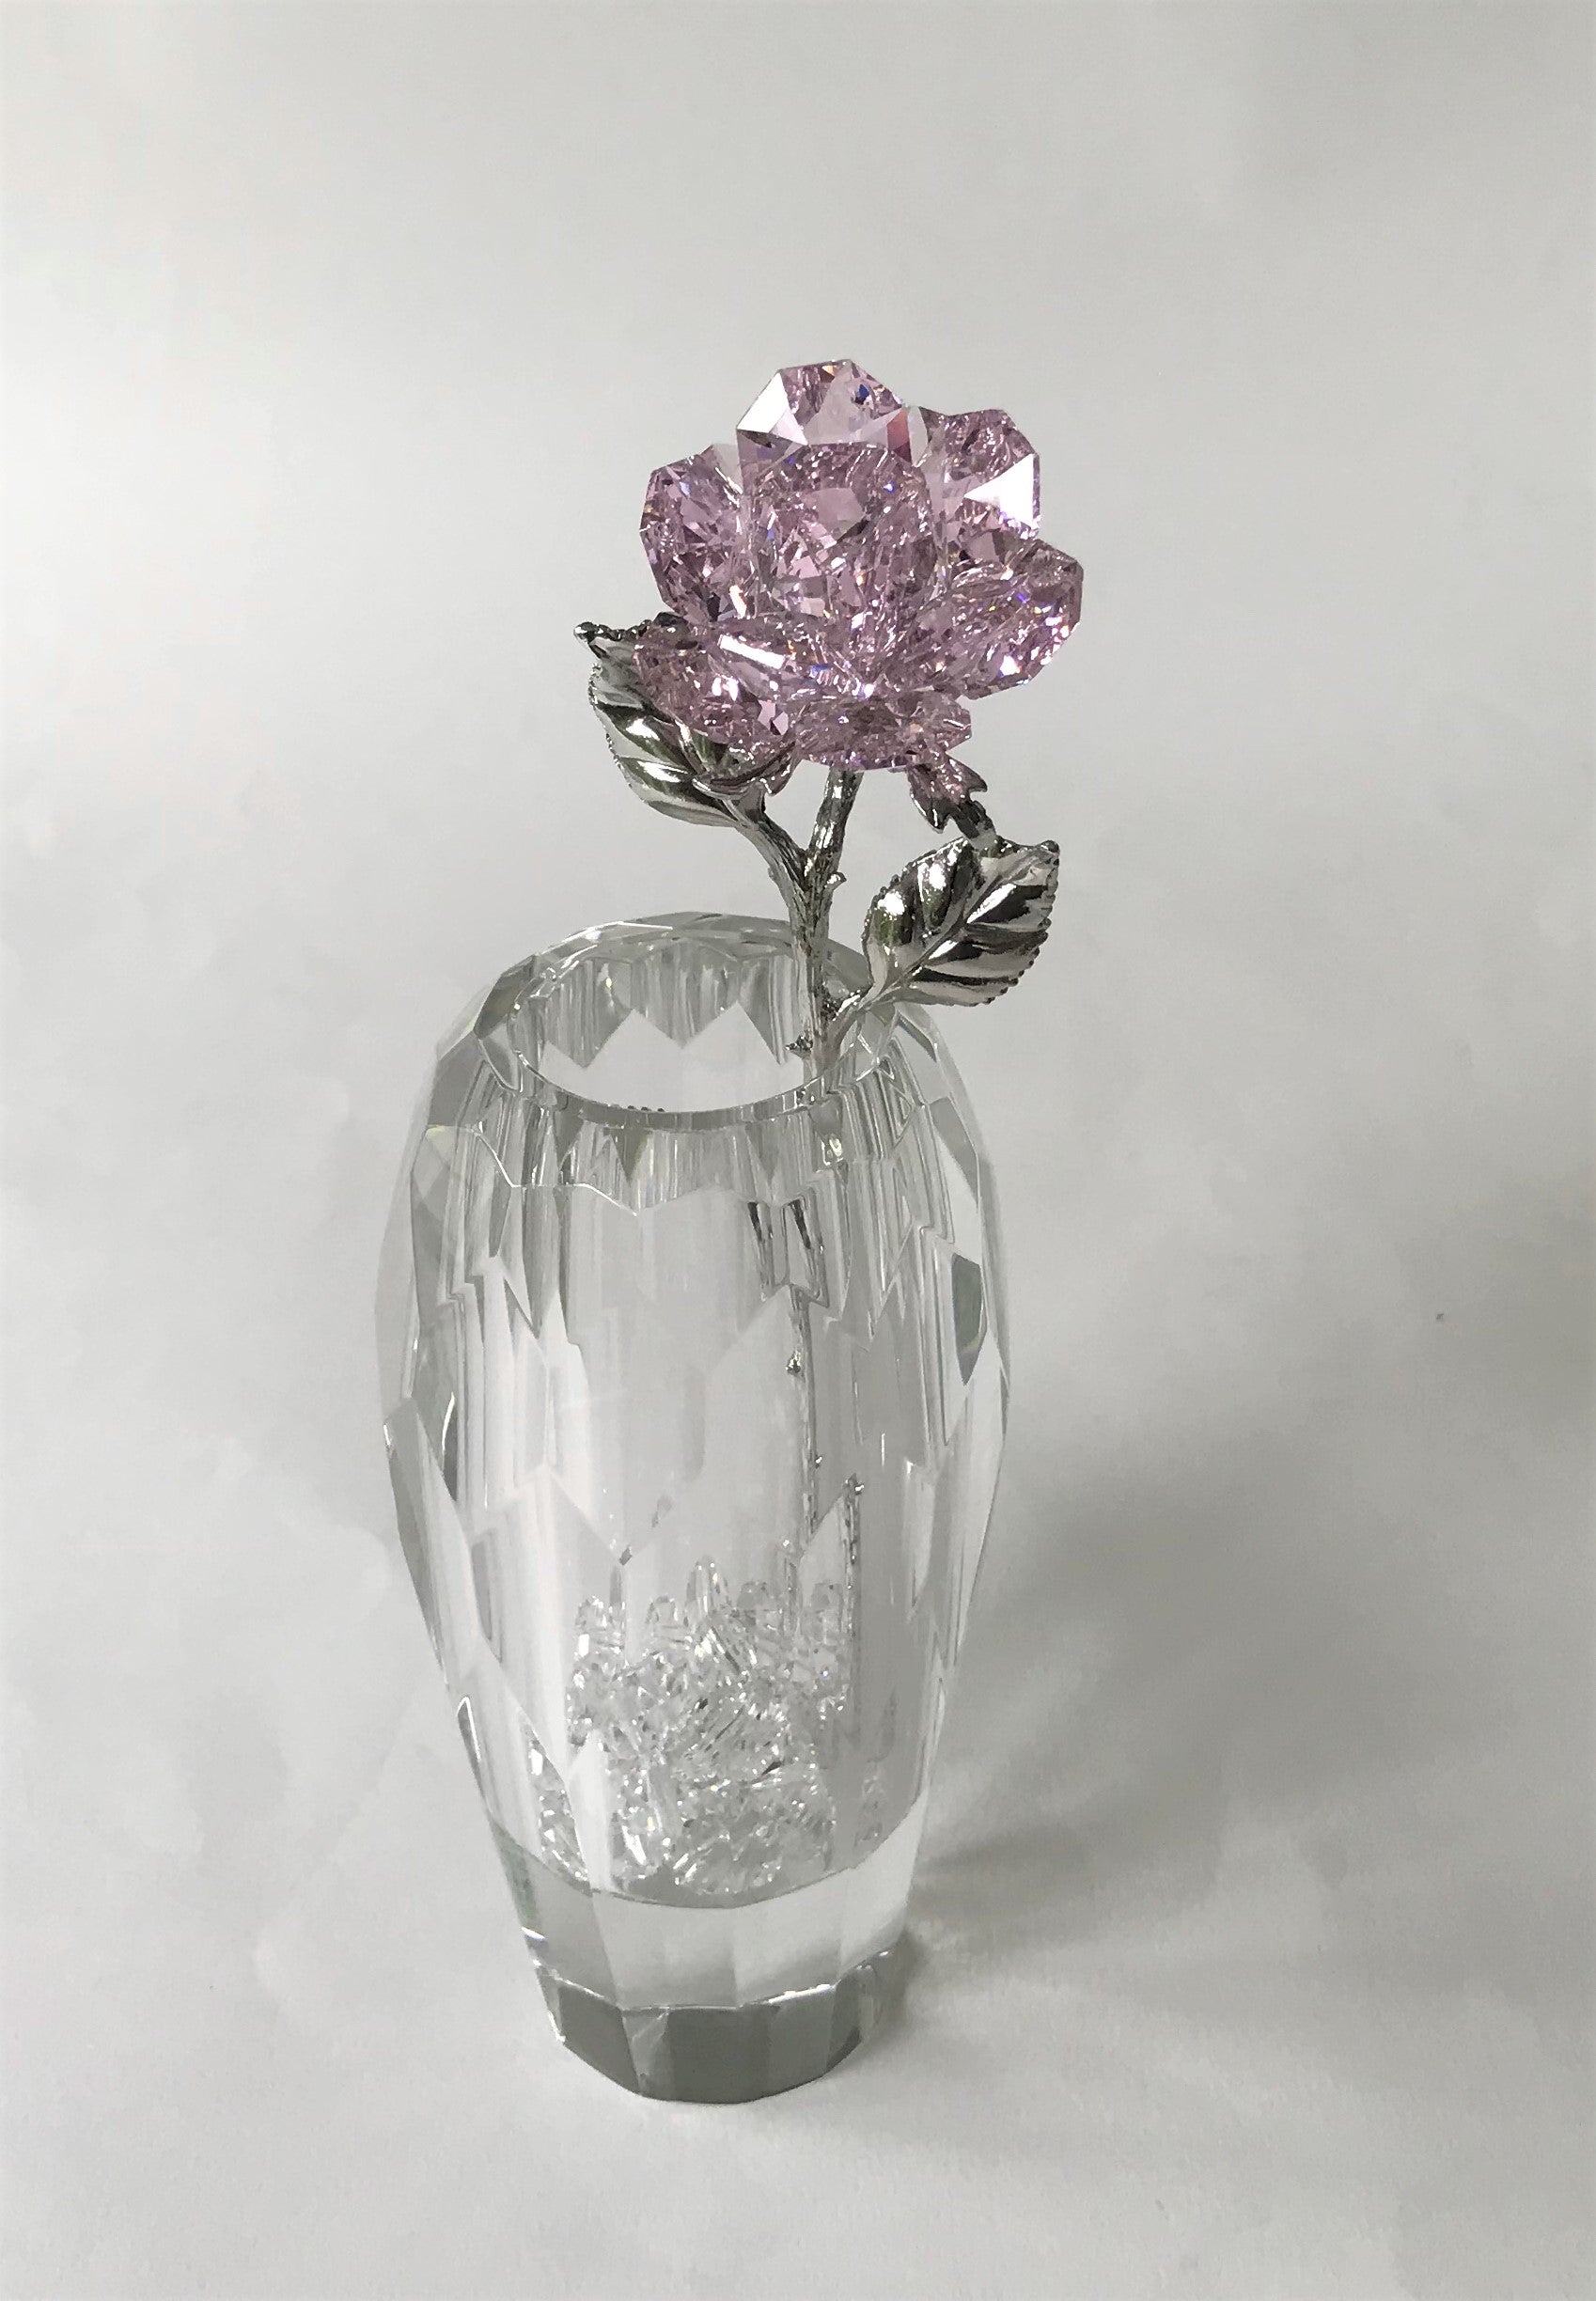 Pink Crystal Rose Handcrafted By Bjcrystalgifts Using Swarovski